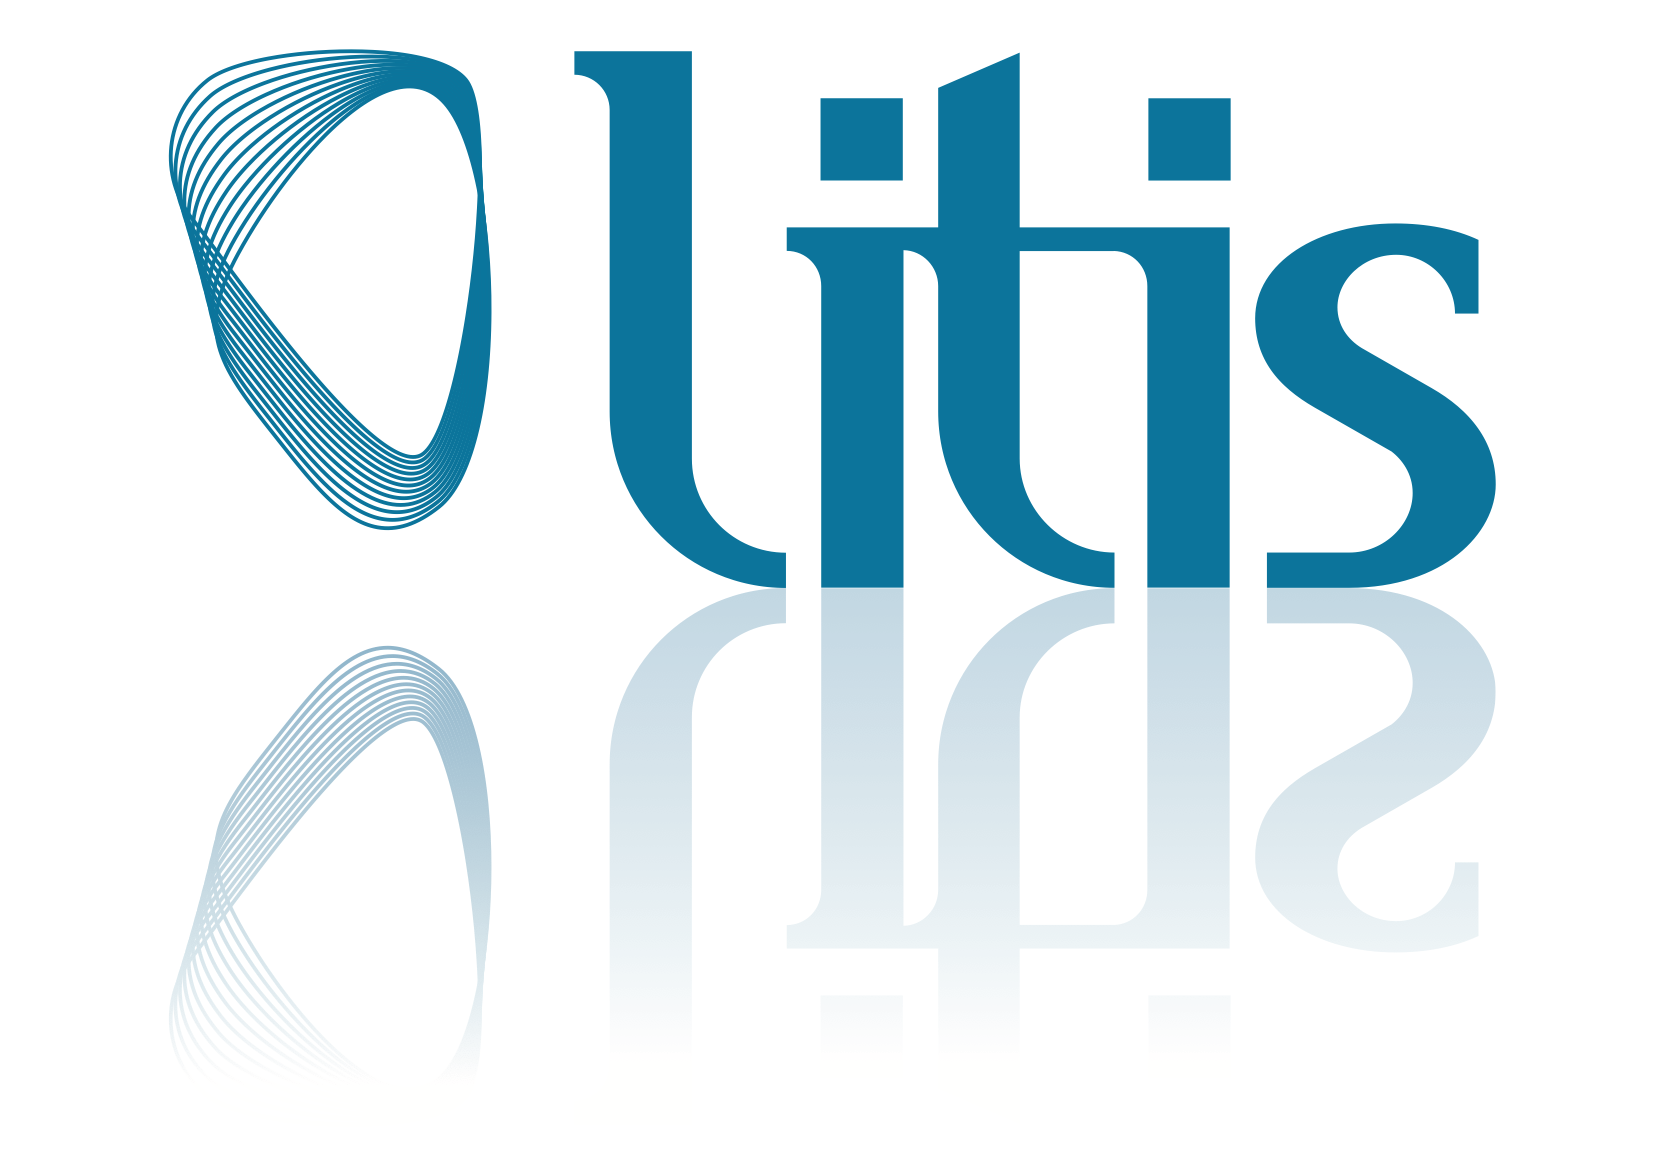 Logo LITIS